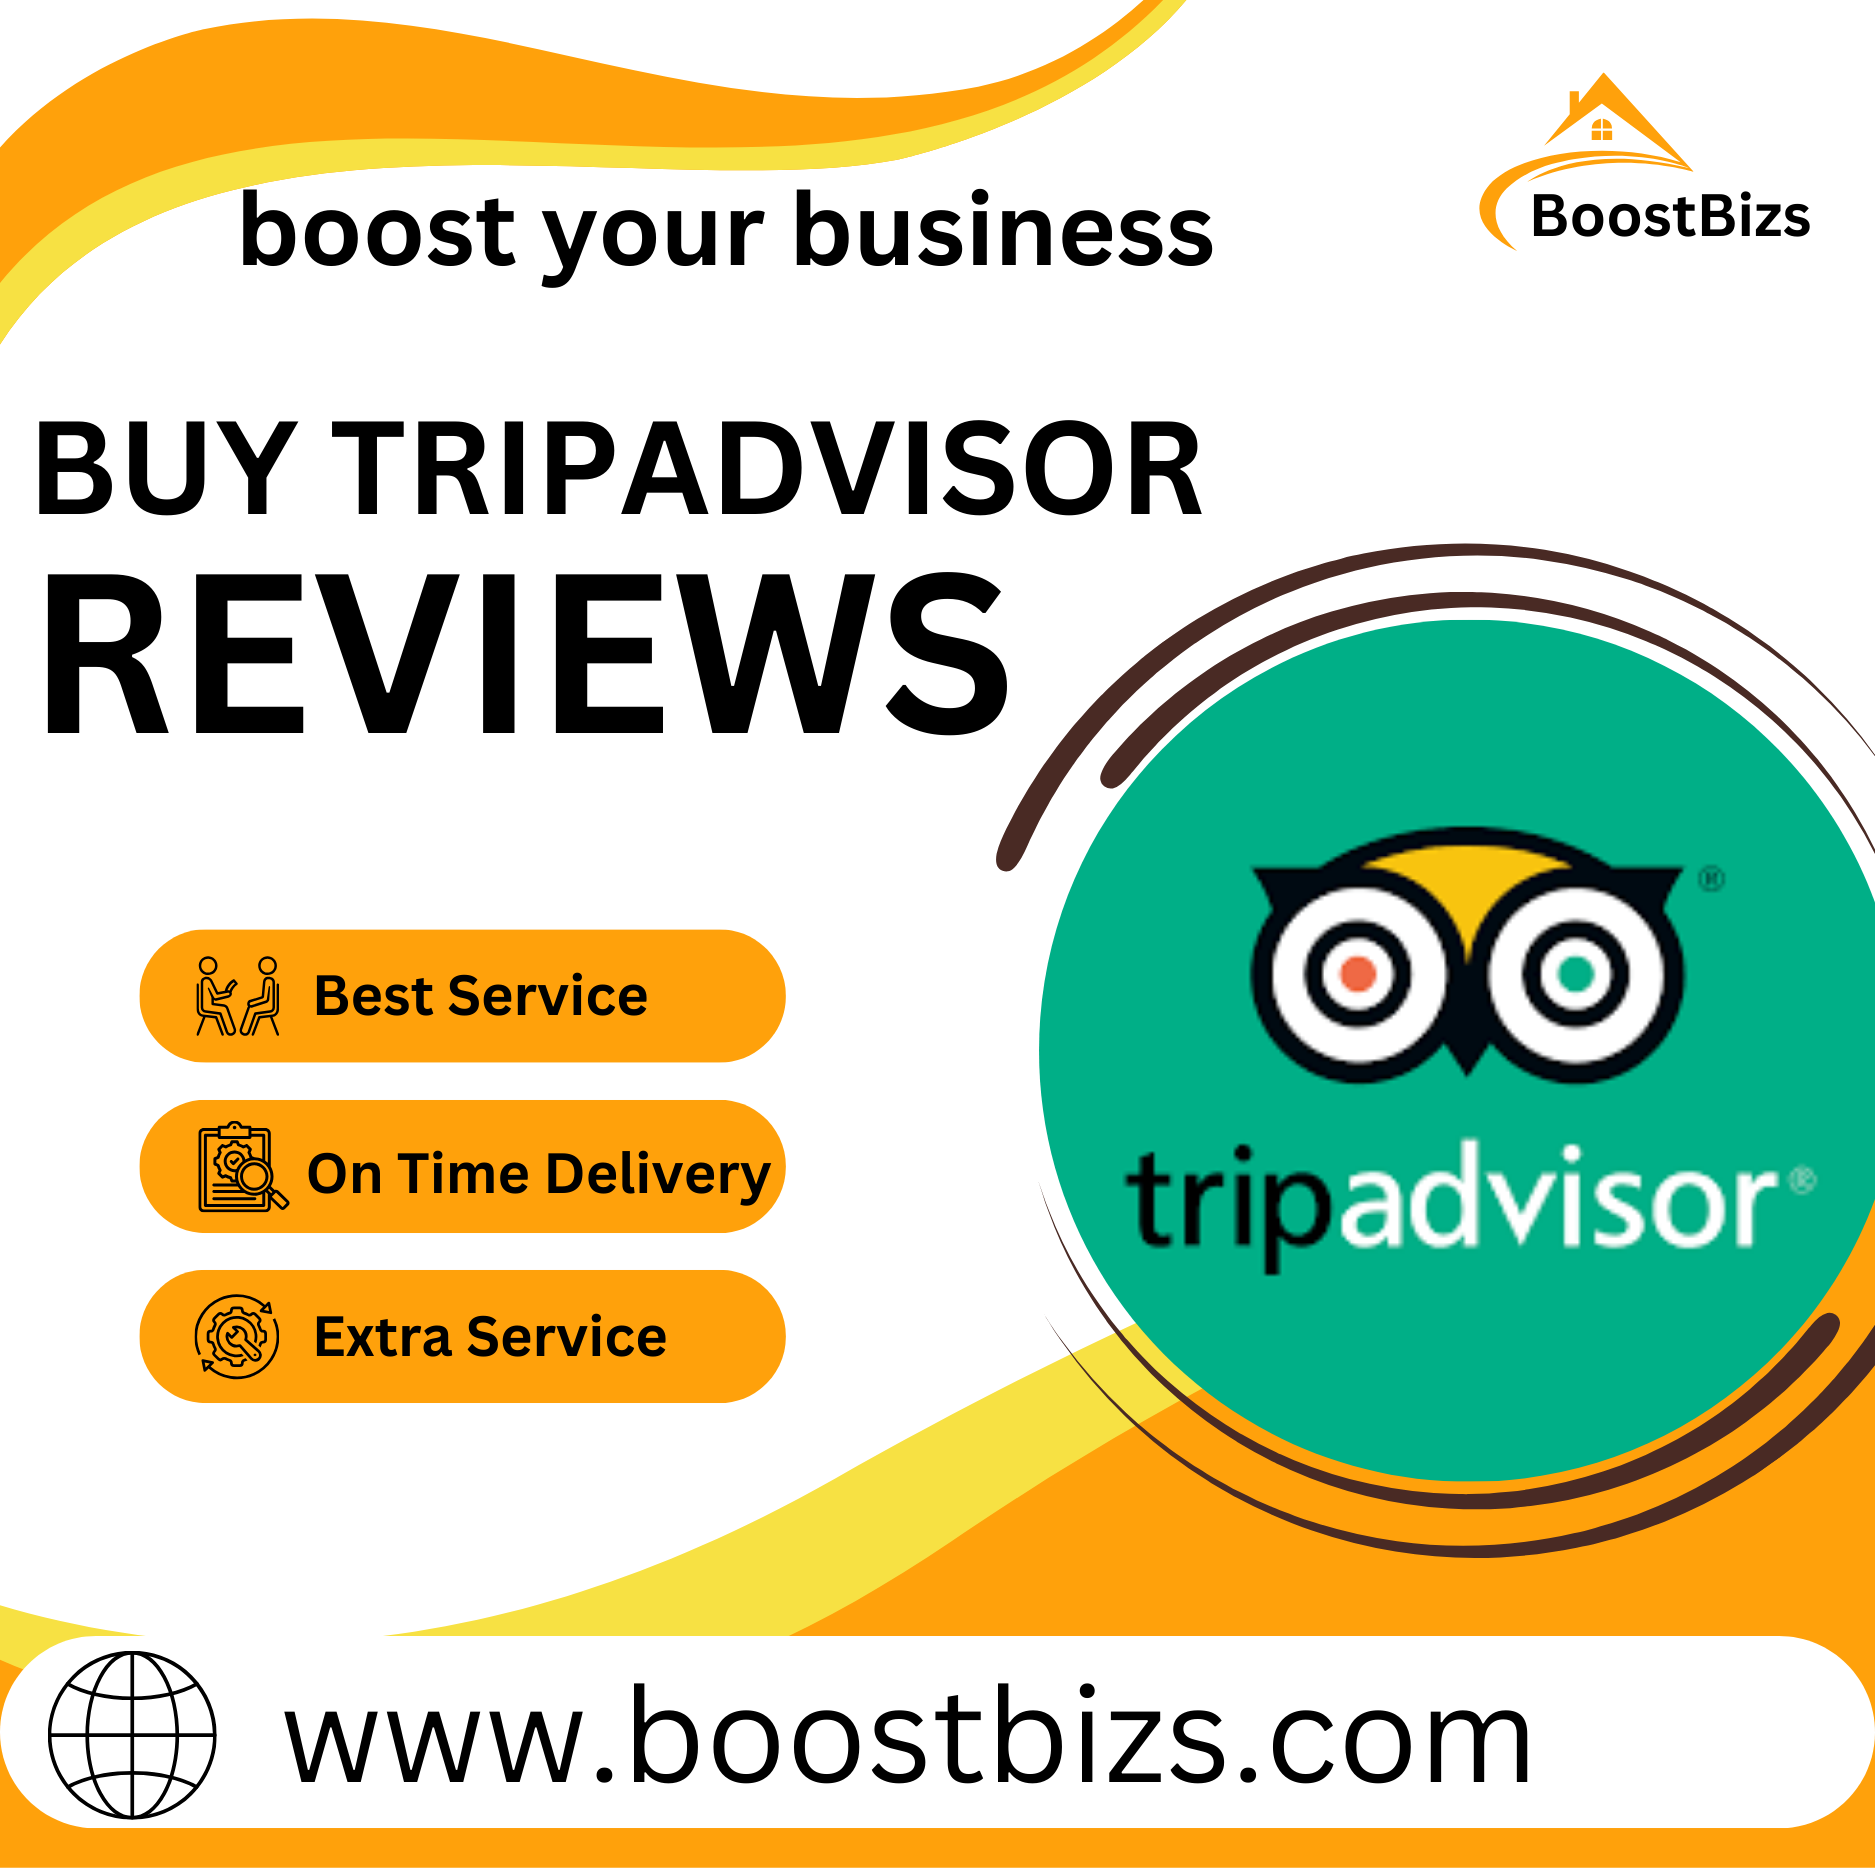 Buy TripAdvisor Reviews - BOOSTBIZS